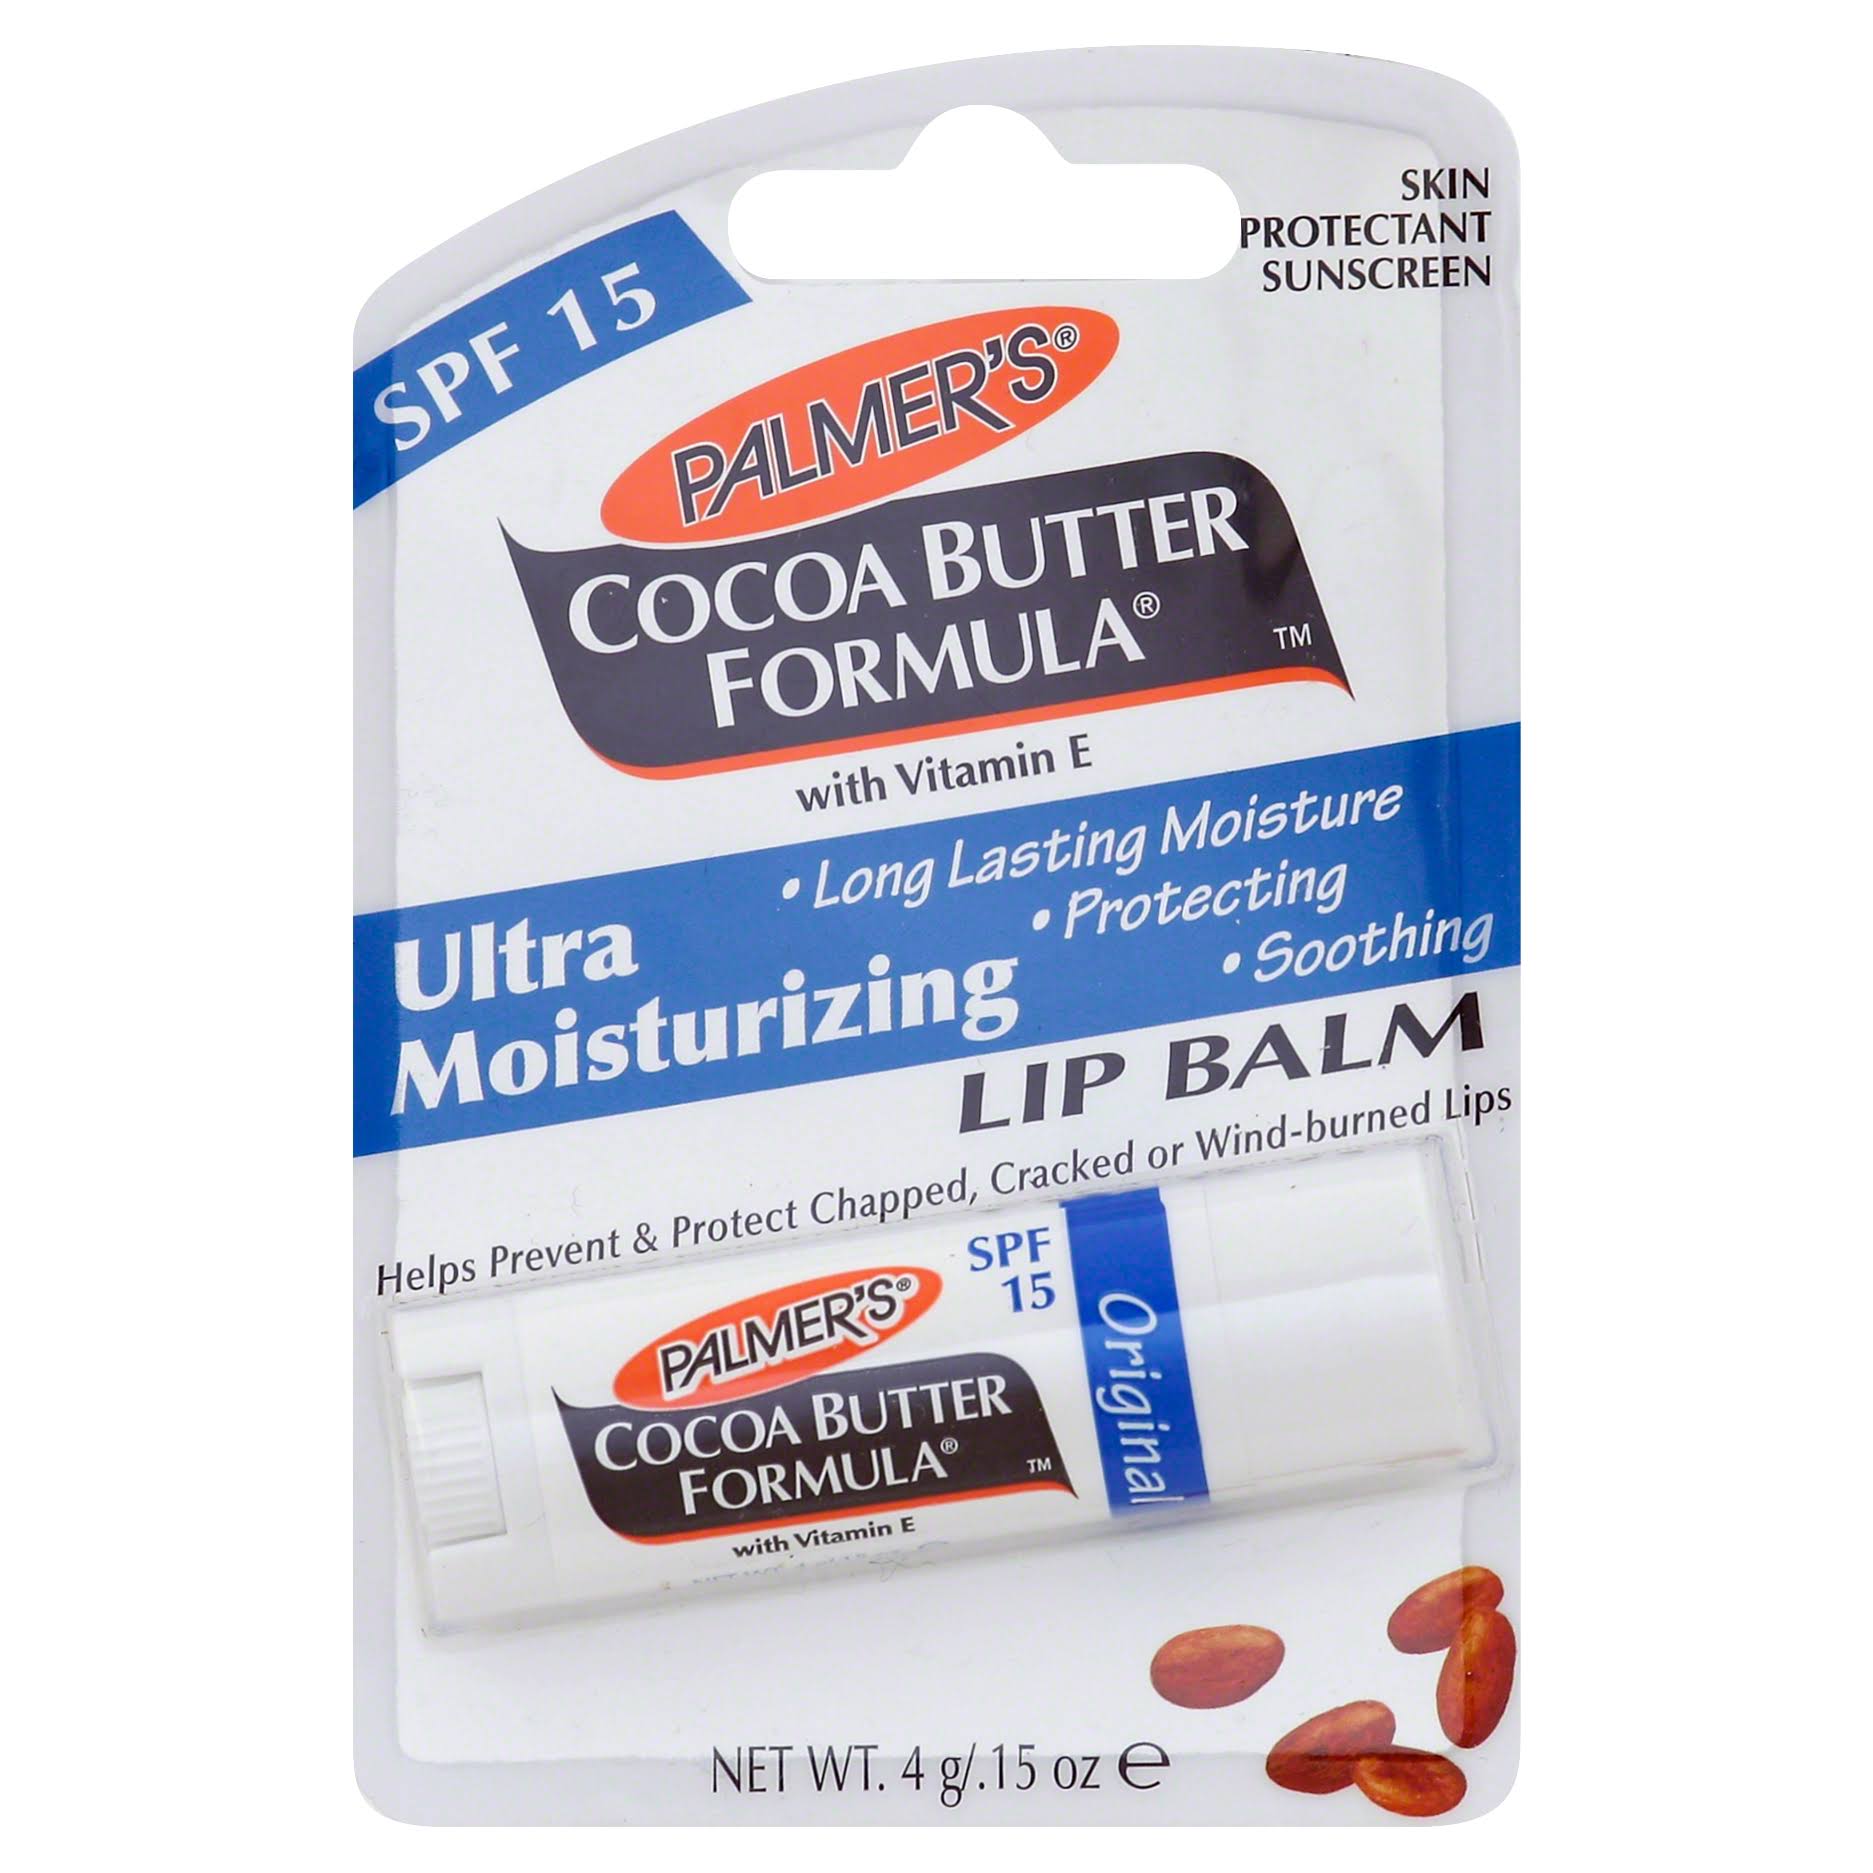 Palmer's Cocoa Butter Formula Lip Balm - SPF 15, 4g